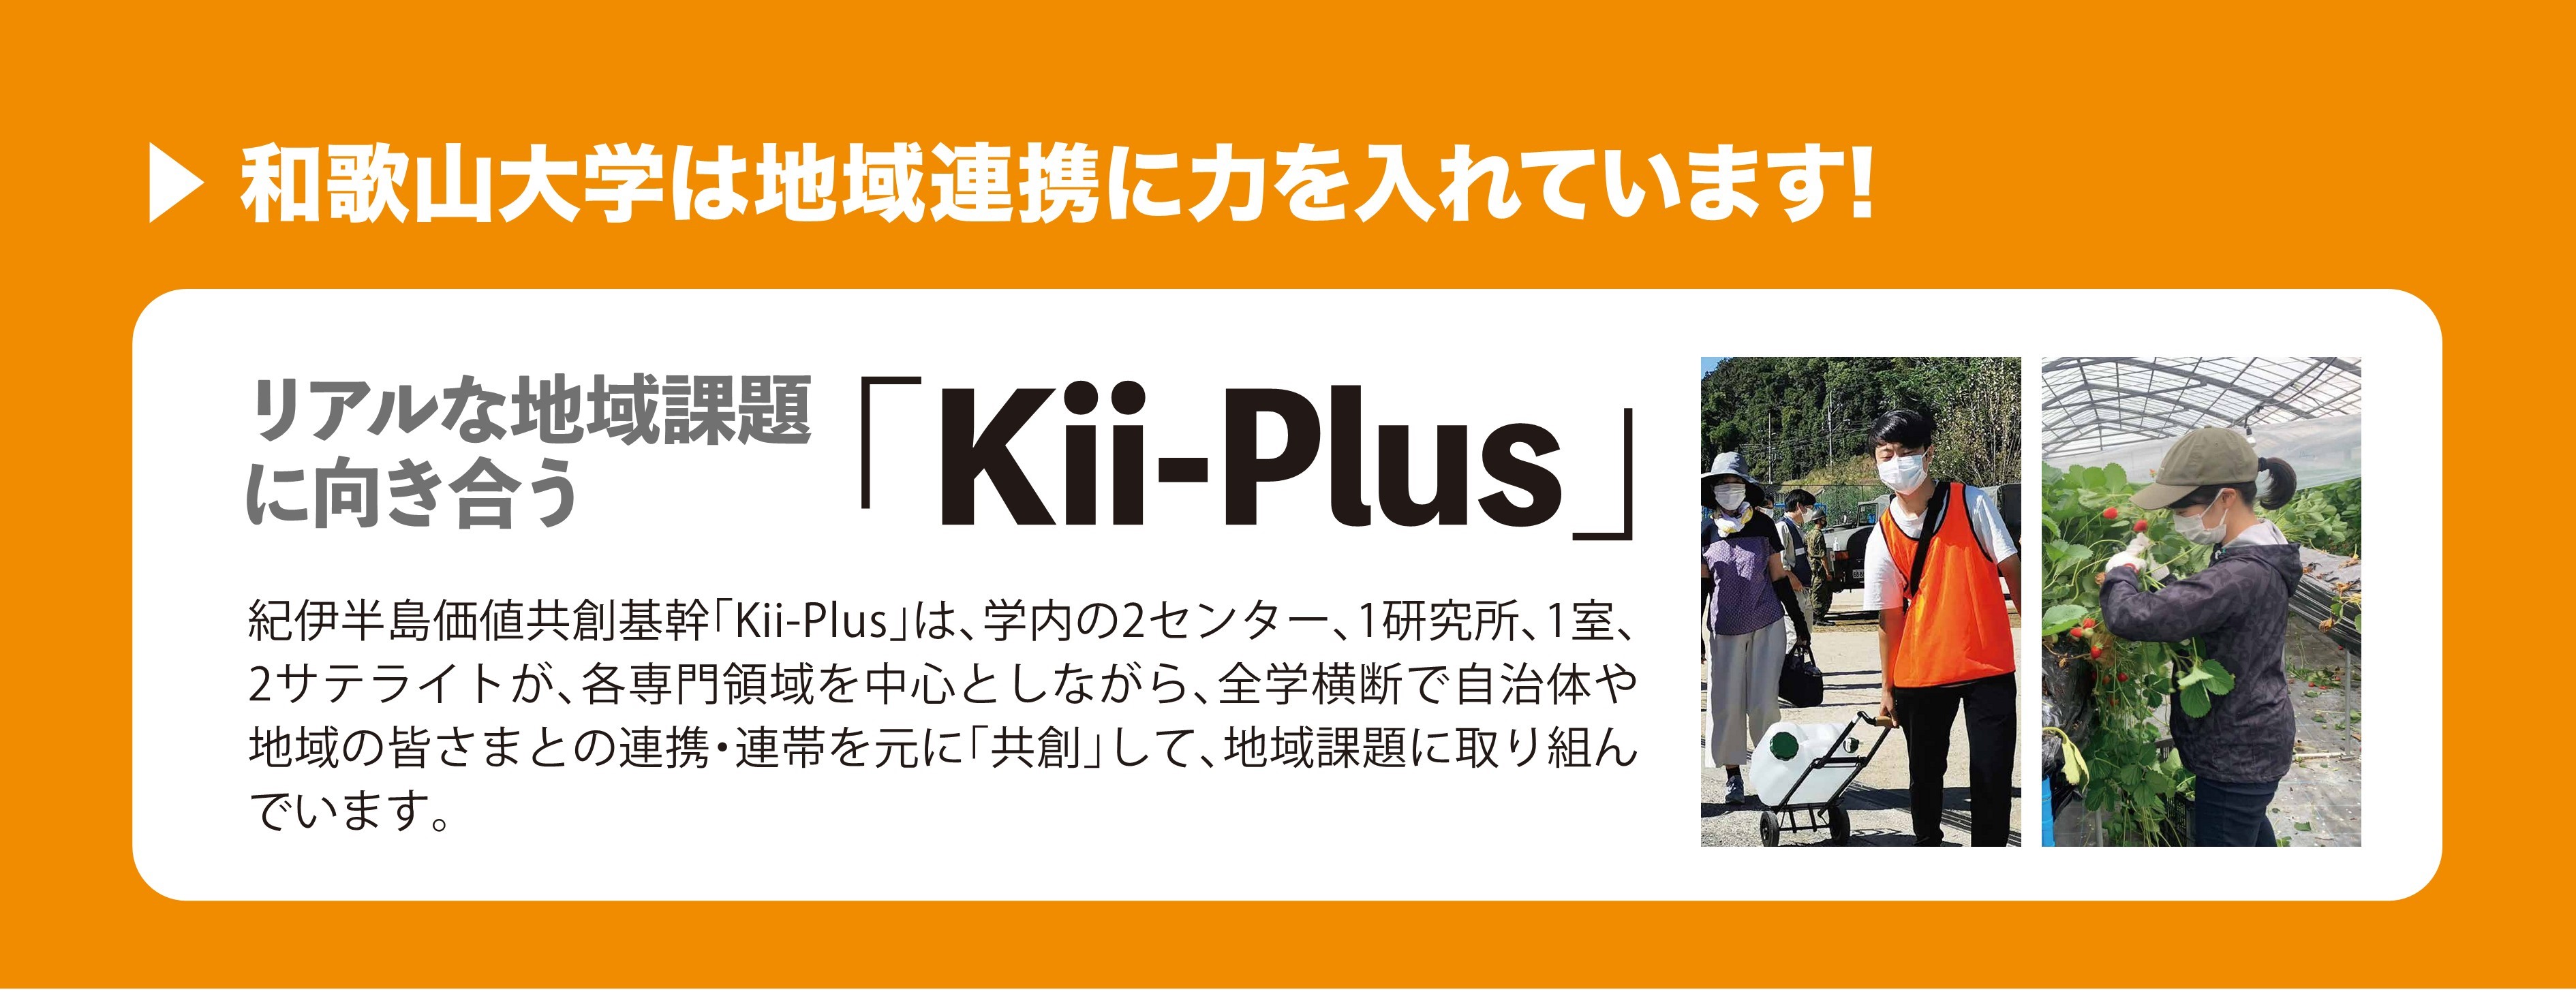 Kii-Plus.jpg